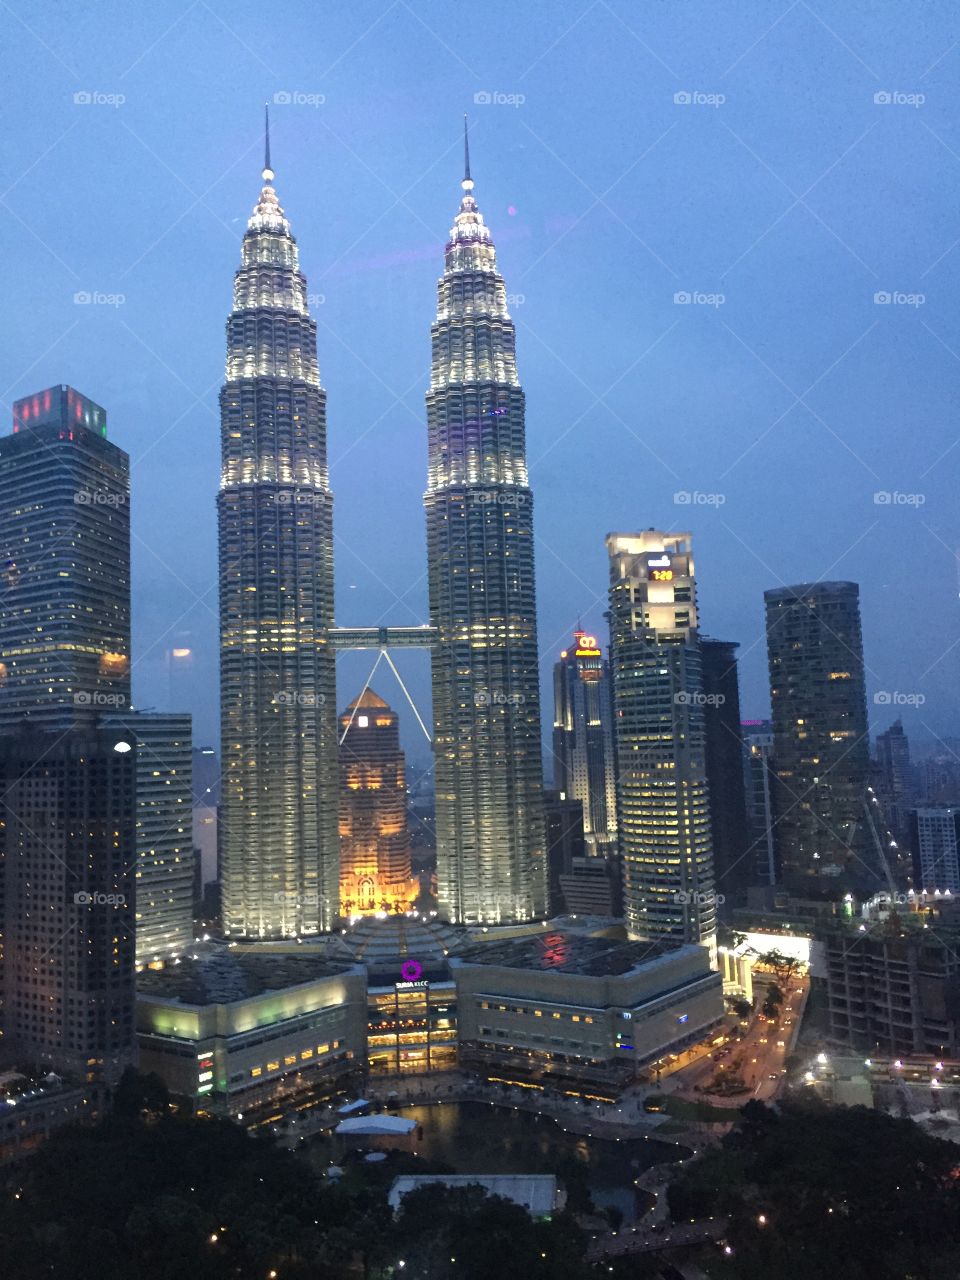 Petronas Tower. City lights in Kuala Lumpur
